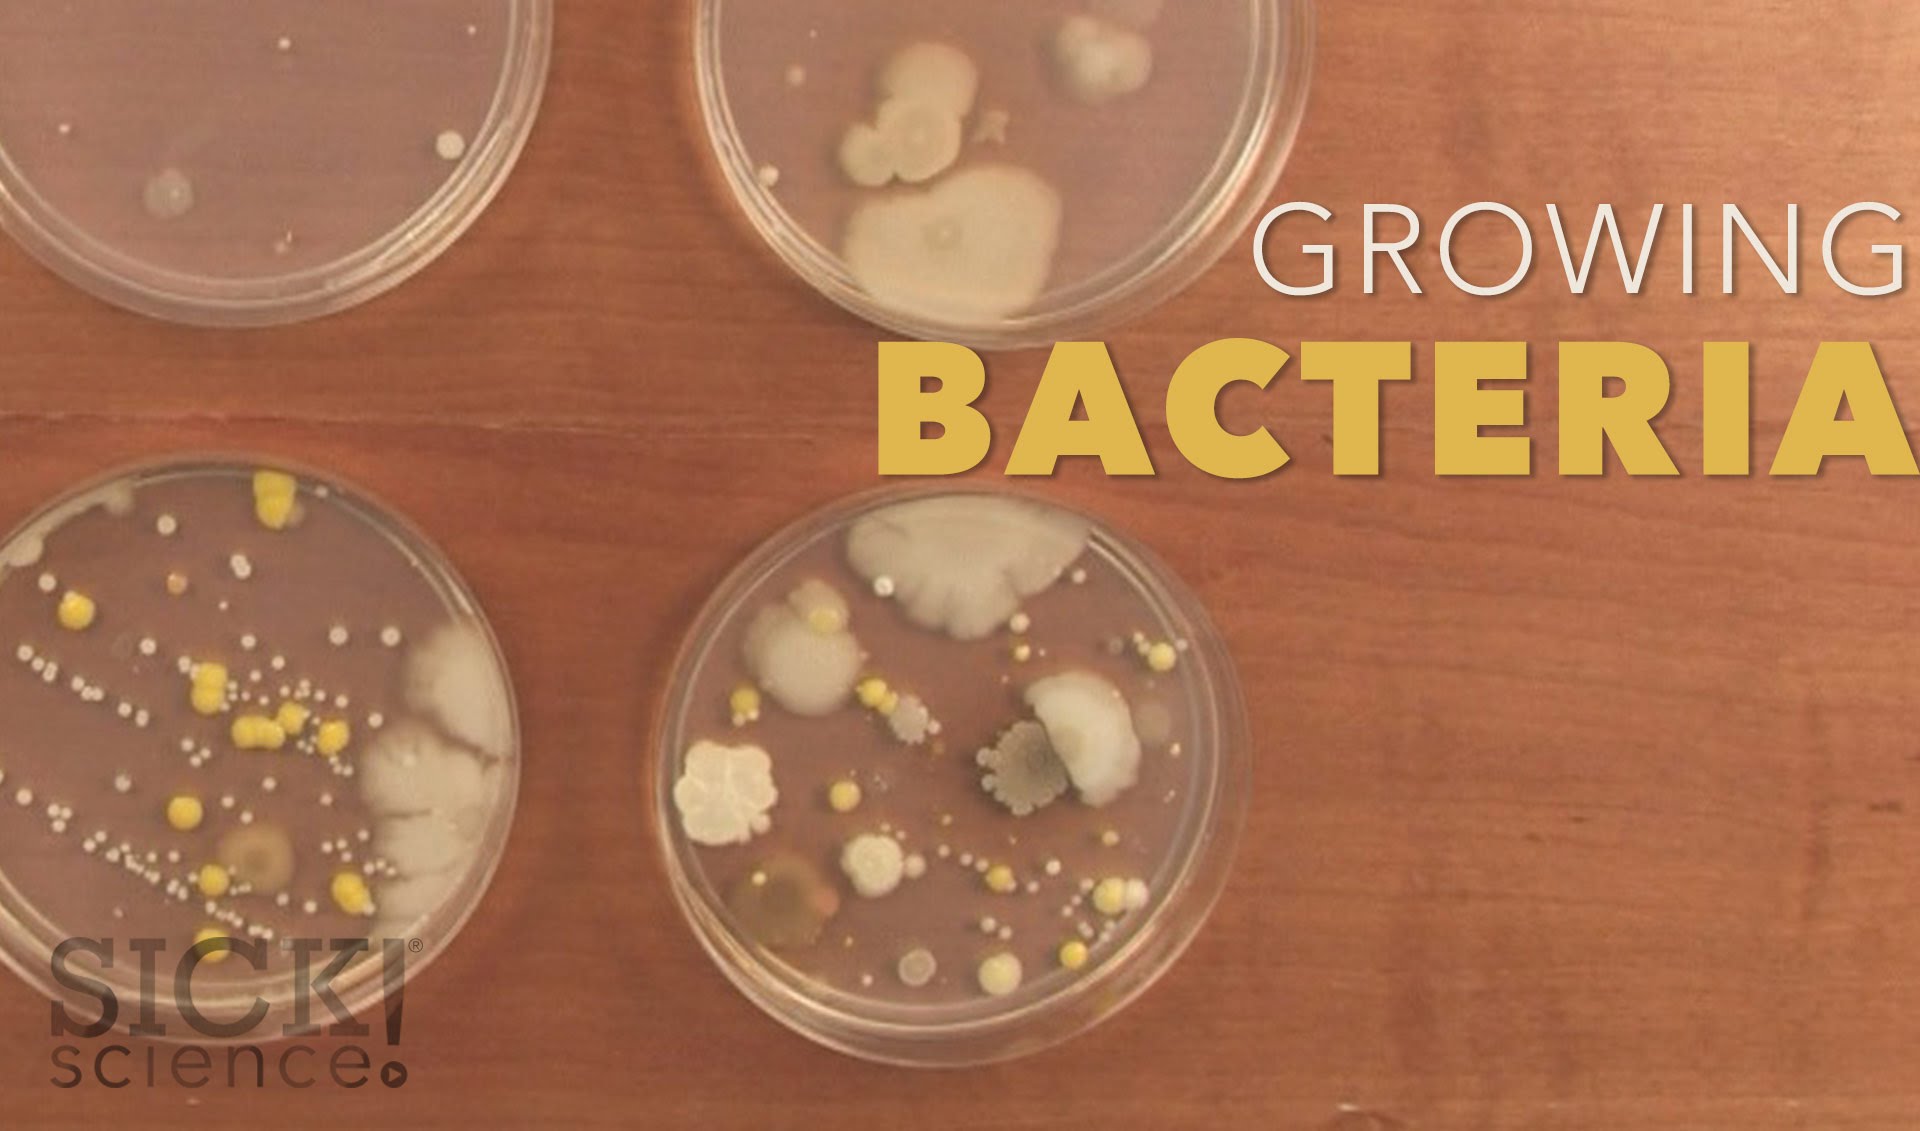 Growing Bacteria - Sick Science! #210 - YouTube